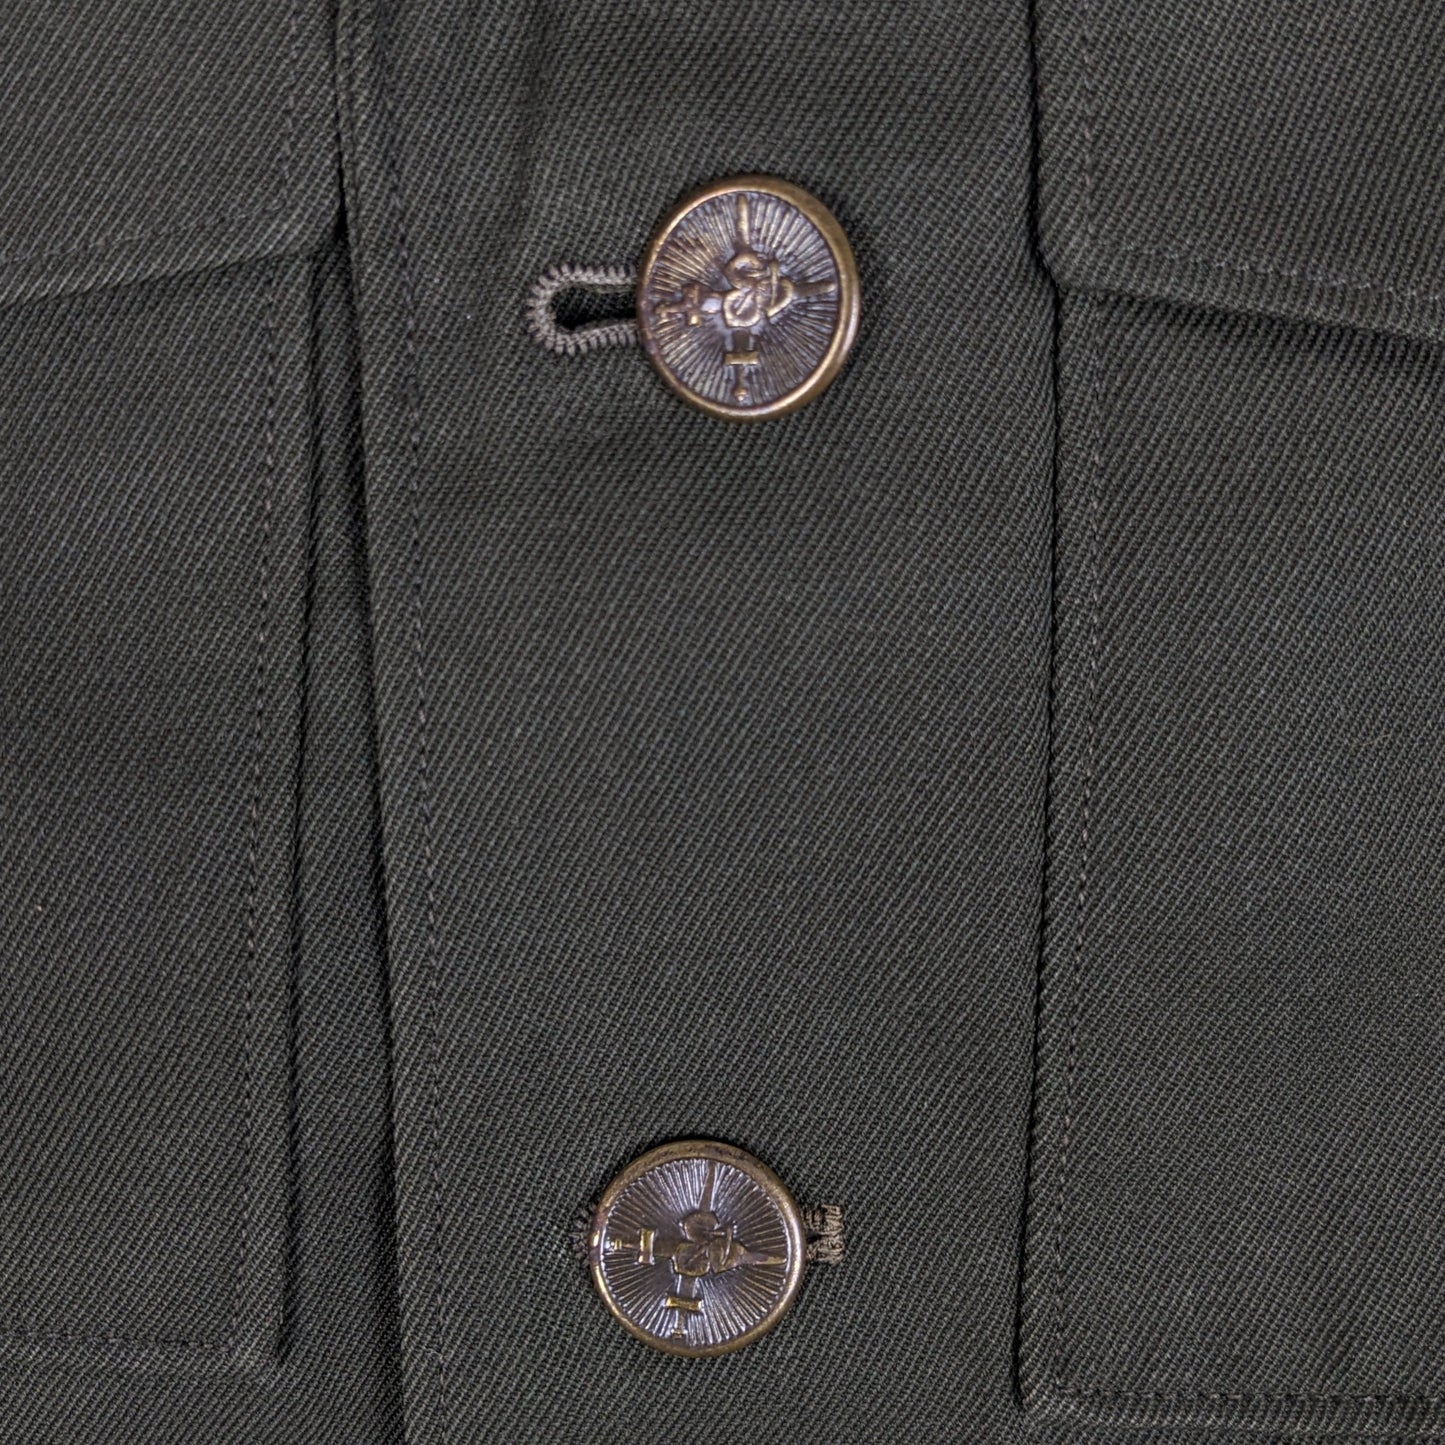 Slovak Army M97 Olive Green Dress Jacket w/ Patch - Medium